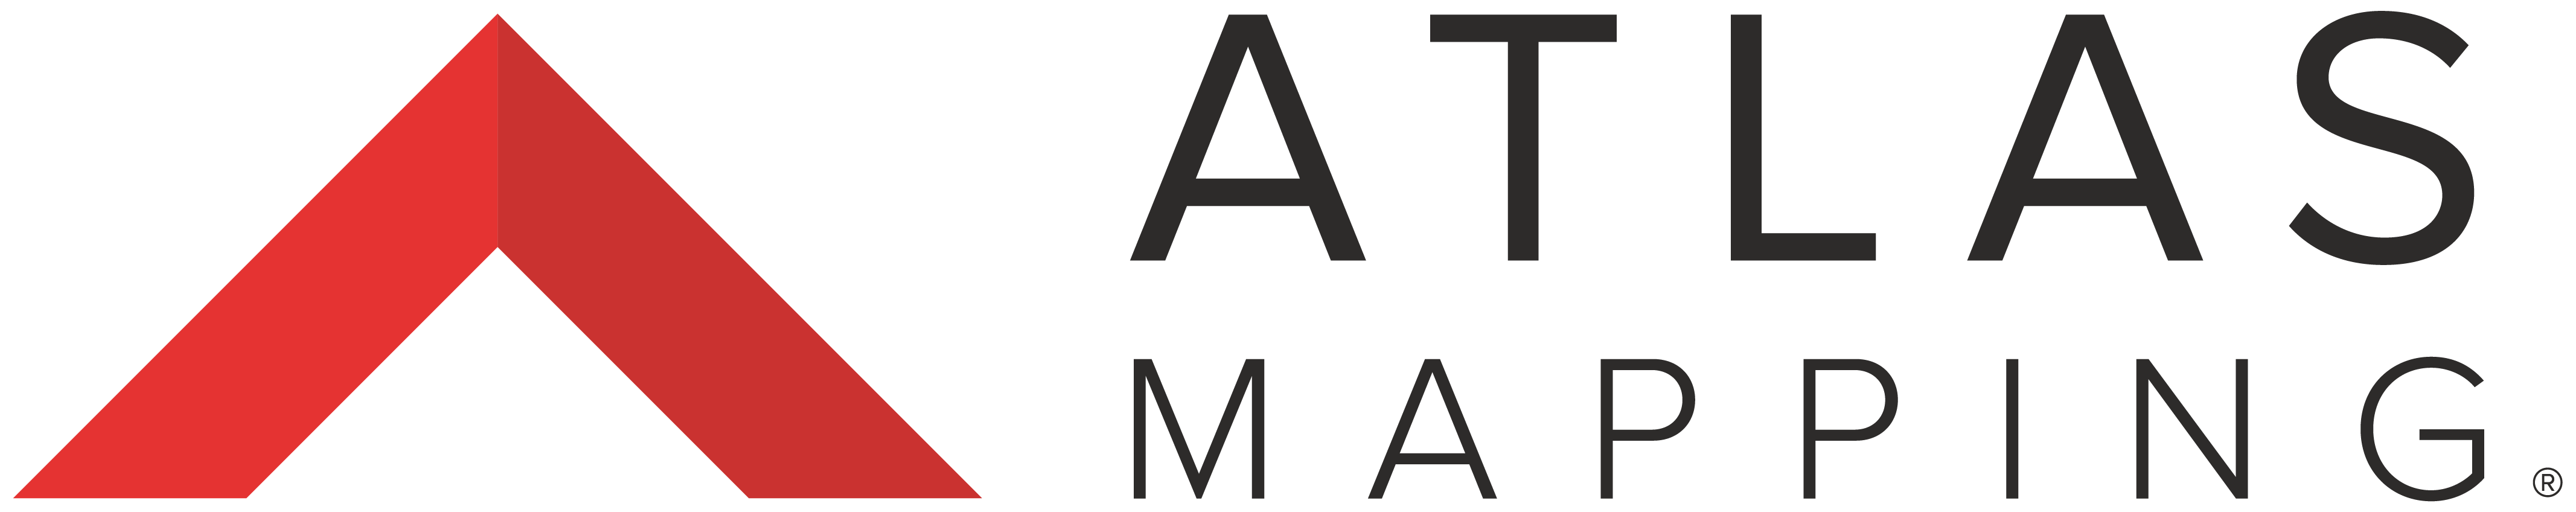 Atlas mapping logo